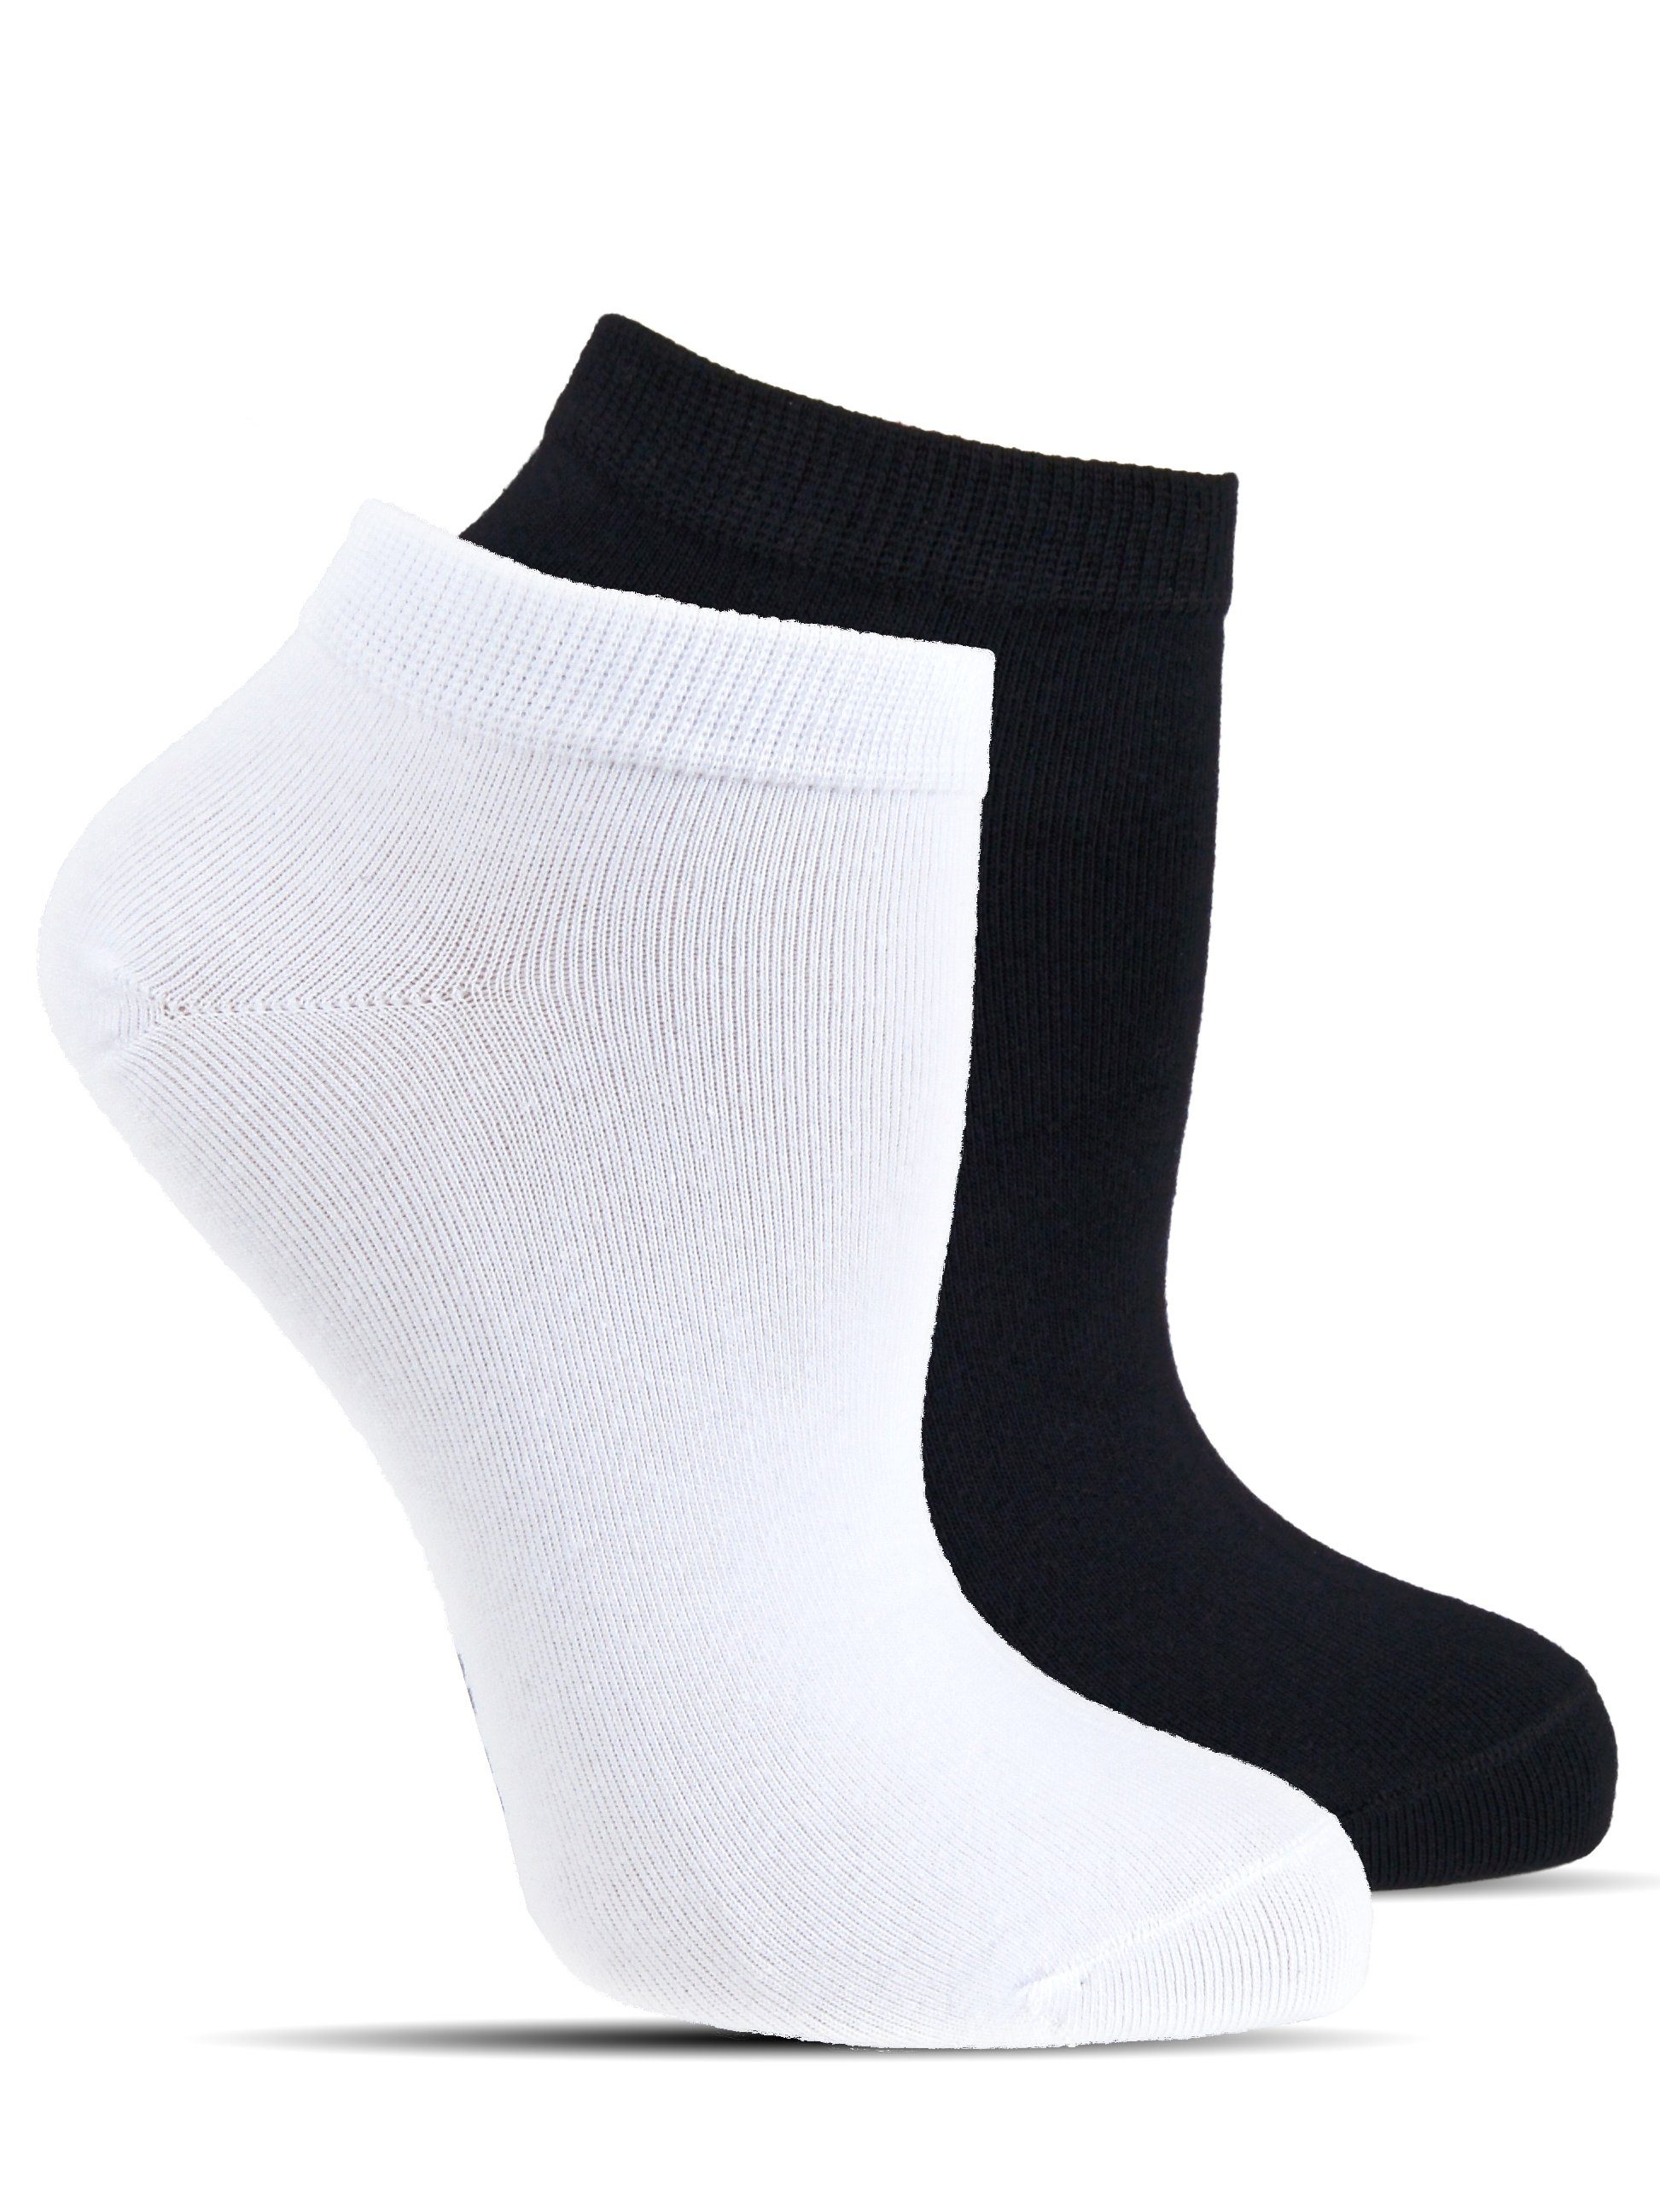 Socked Sneakersocken Damen Baumwolle, + Schwarz/Weiß (12 Paar) Herren Schwarz Kurzsocken / Weiß